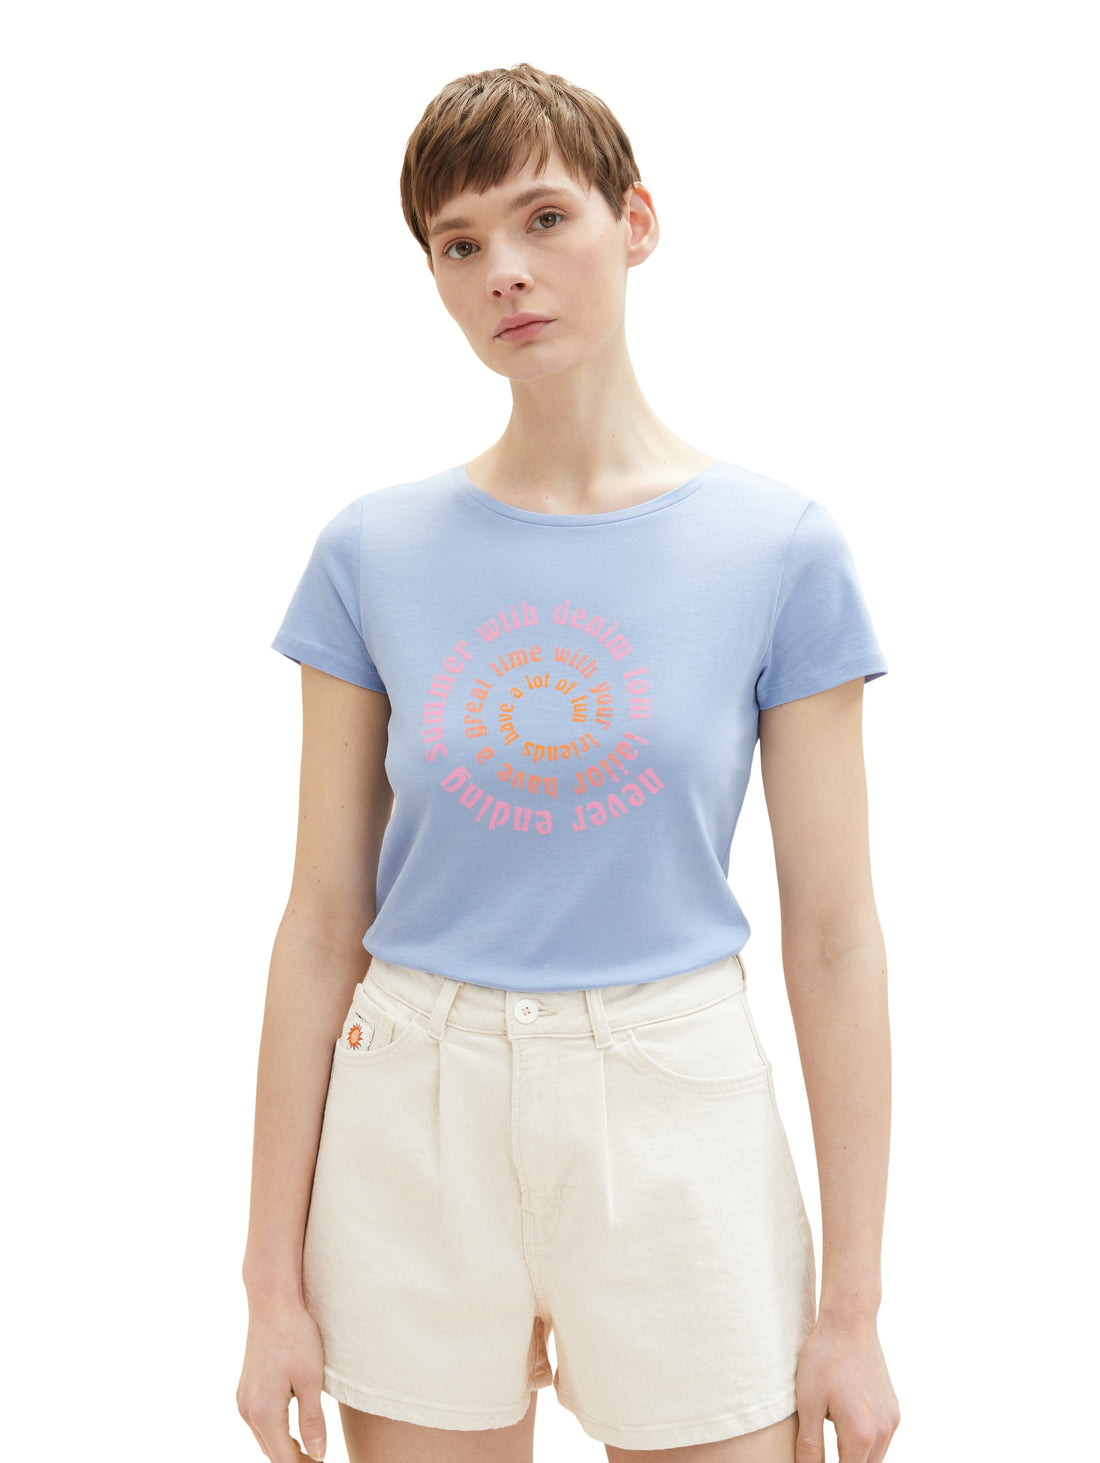 Blue Short Sleeve Round Neck Graphic T-Shirt